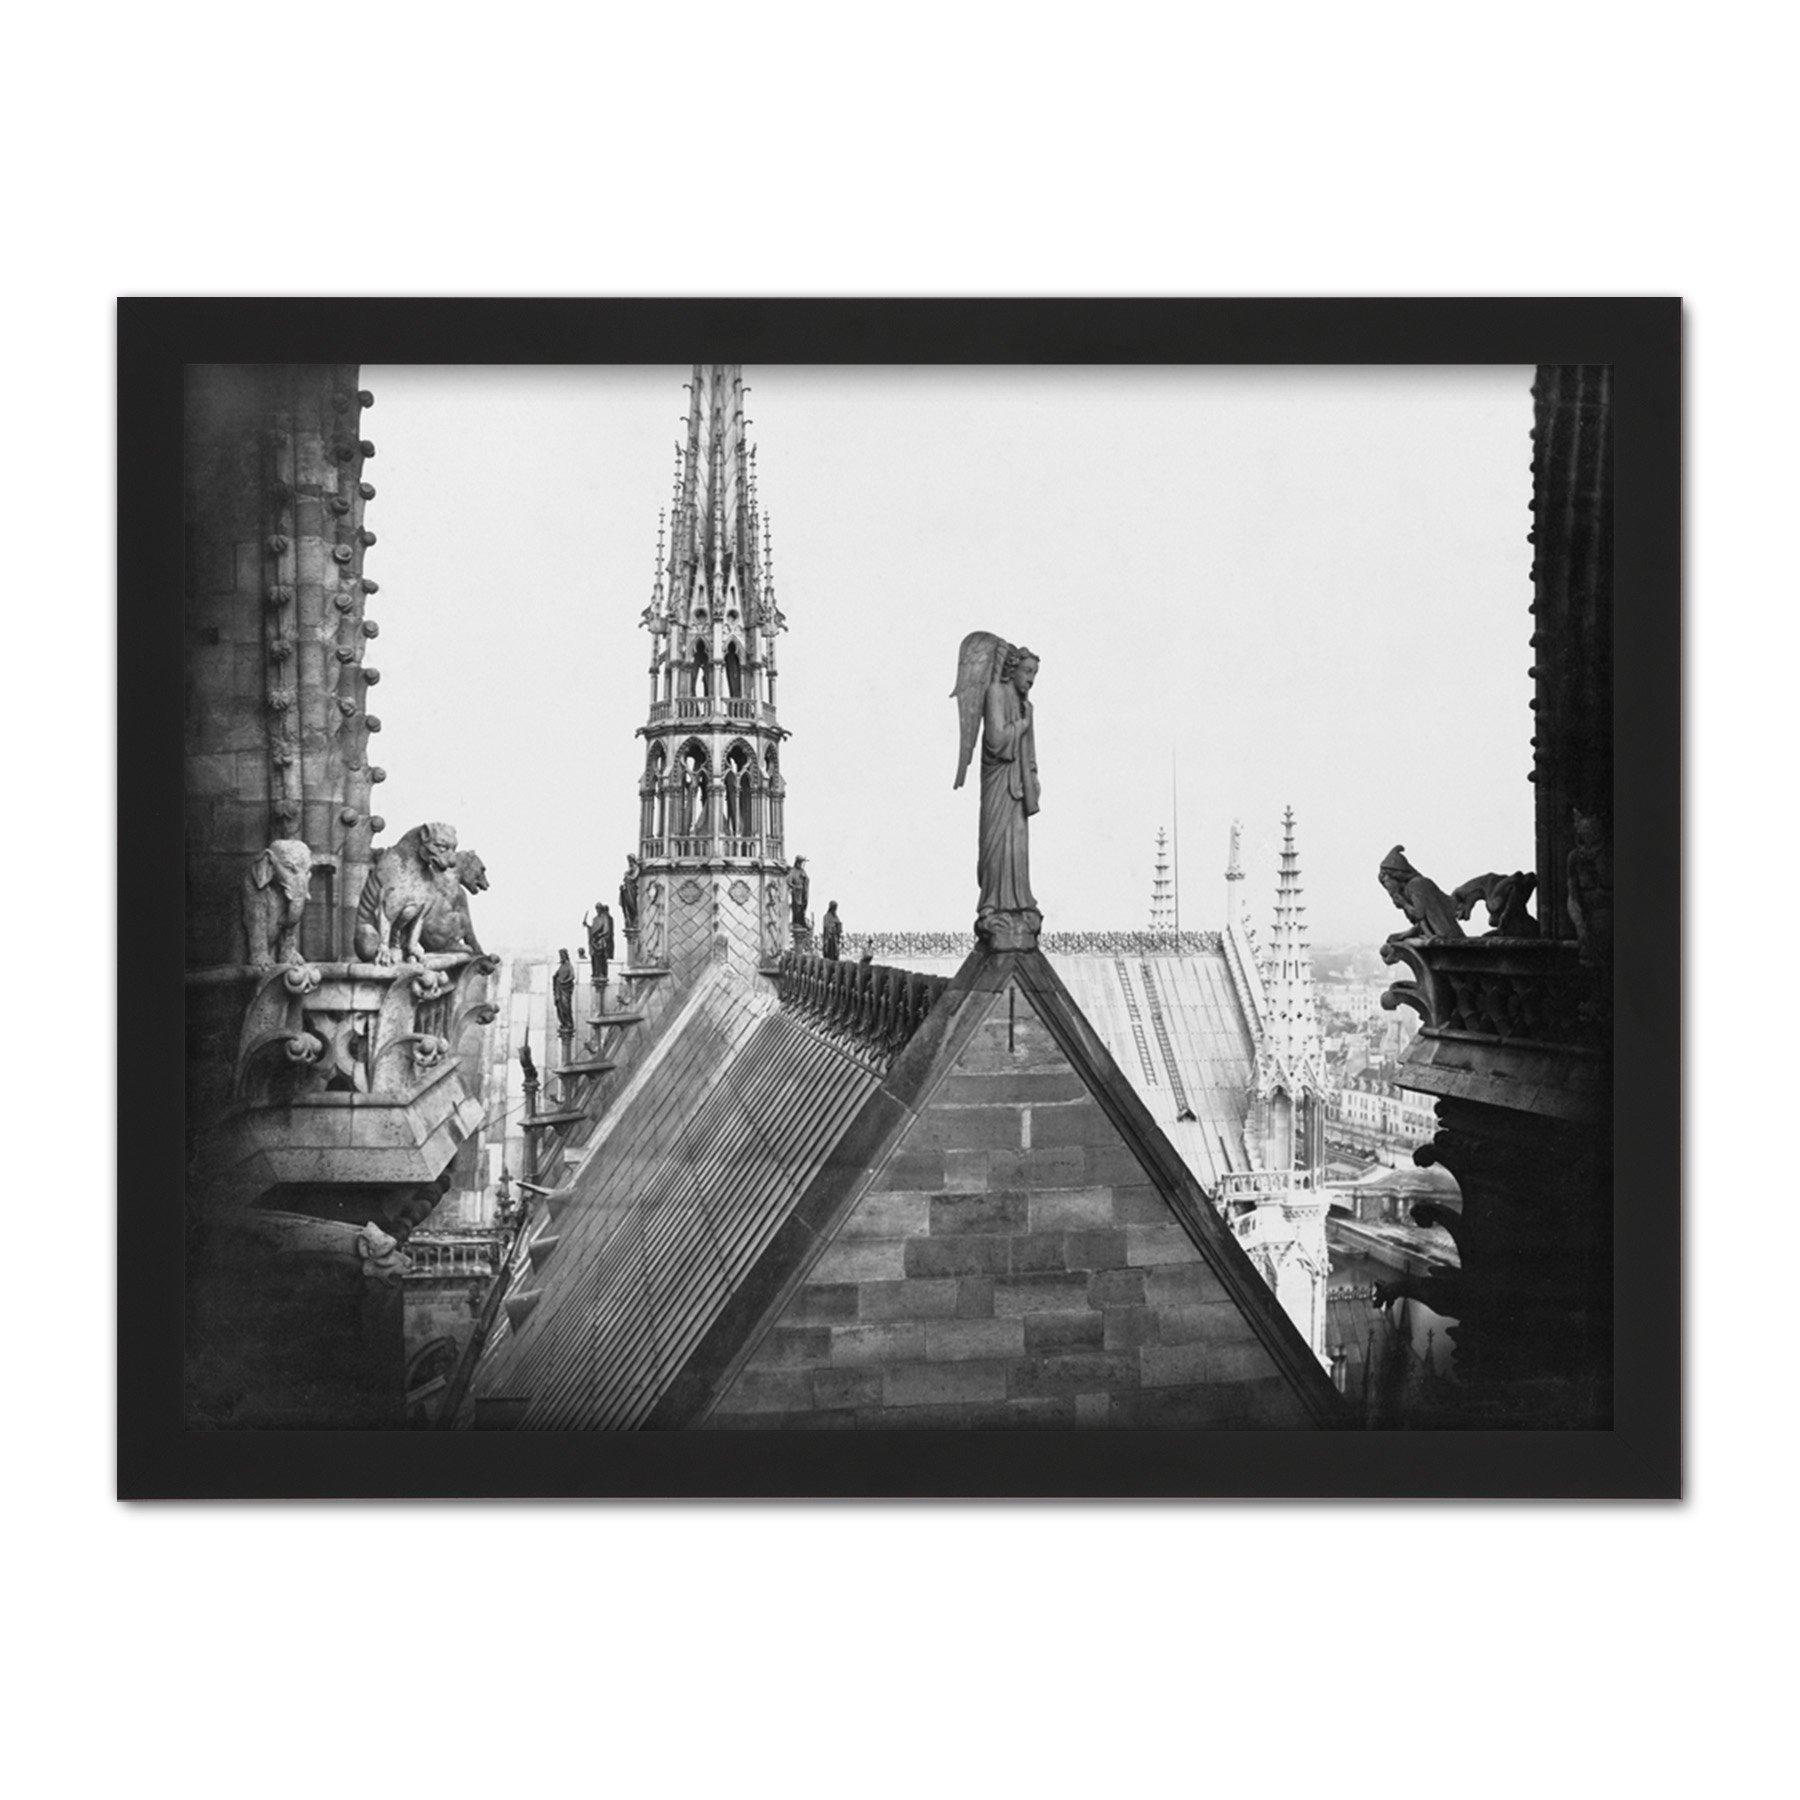 Vintage Photo Notre Dame Paris France Gargoyle Spire Roof Large Framed Wall Decor Art Print